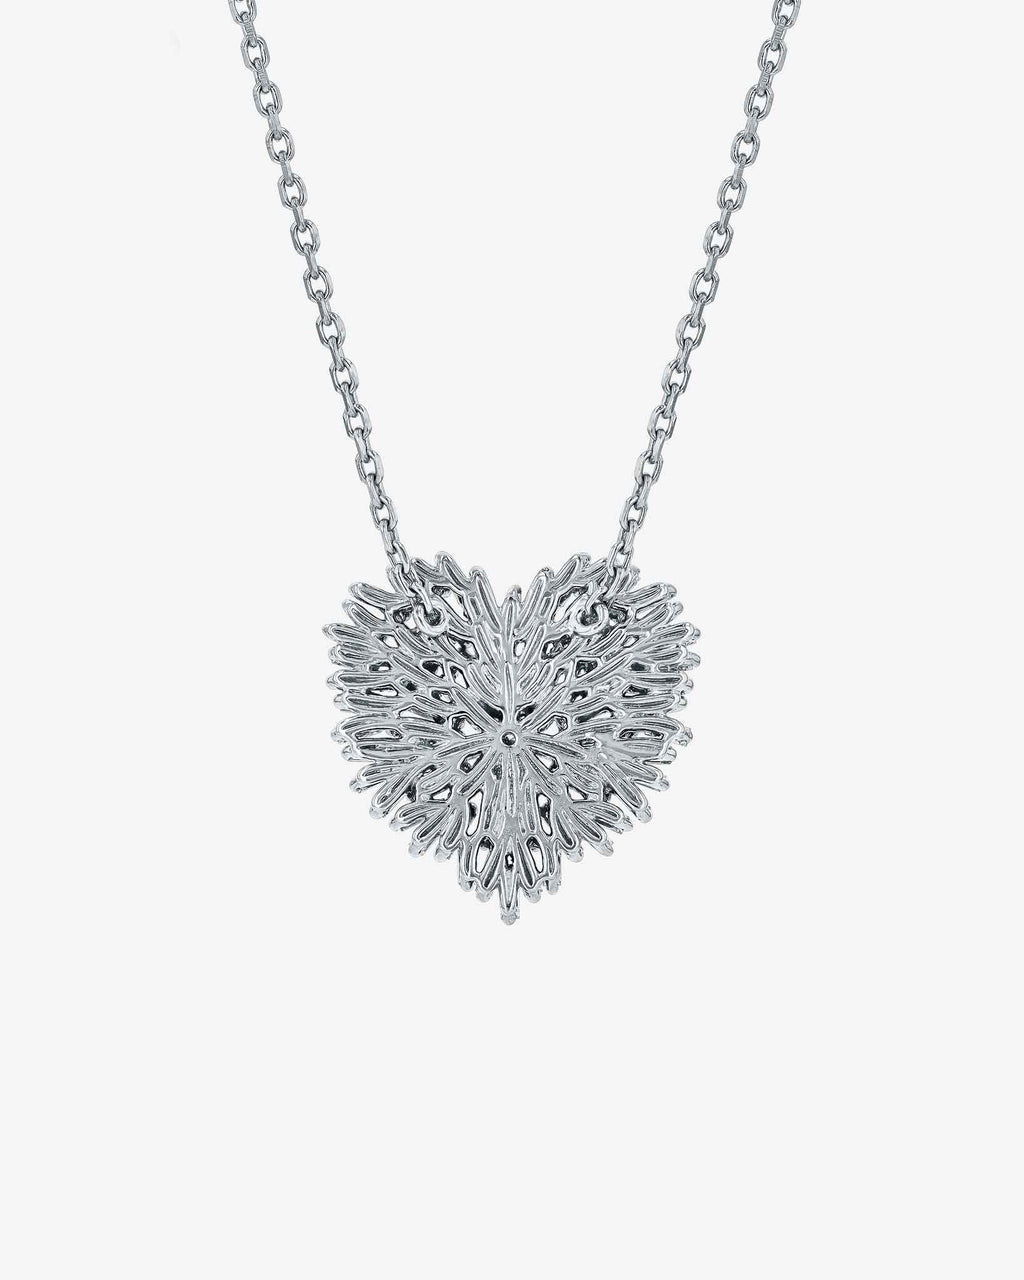 Hanna med- Classic diamond heart pendant — J. Sampieri